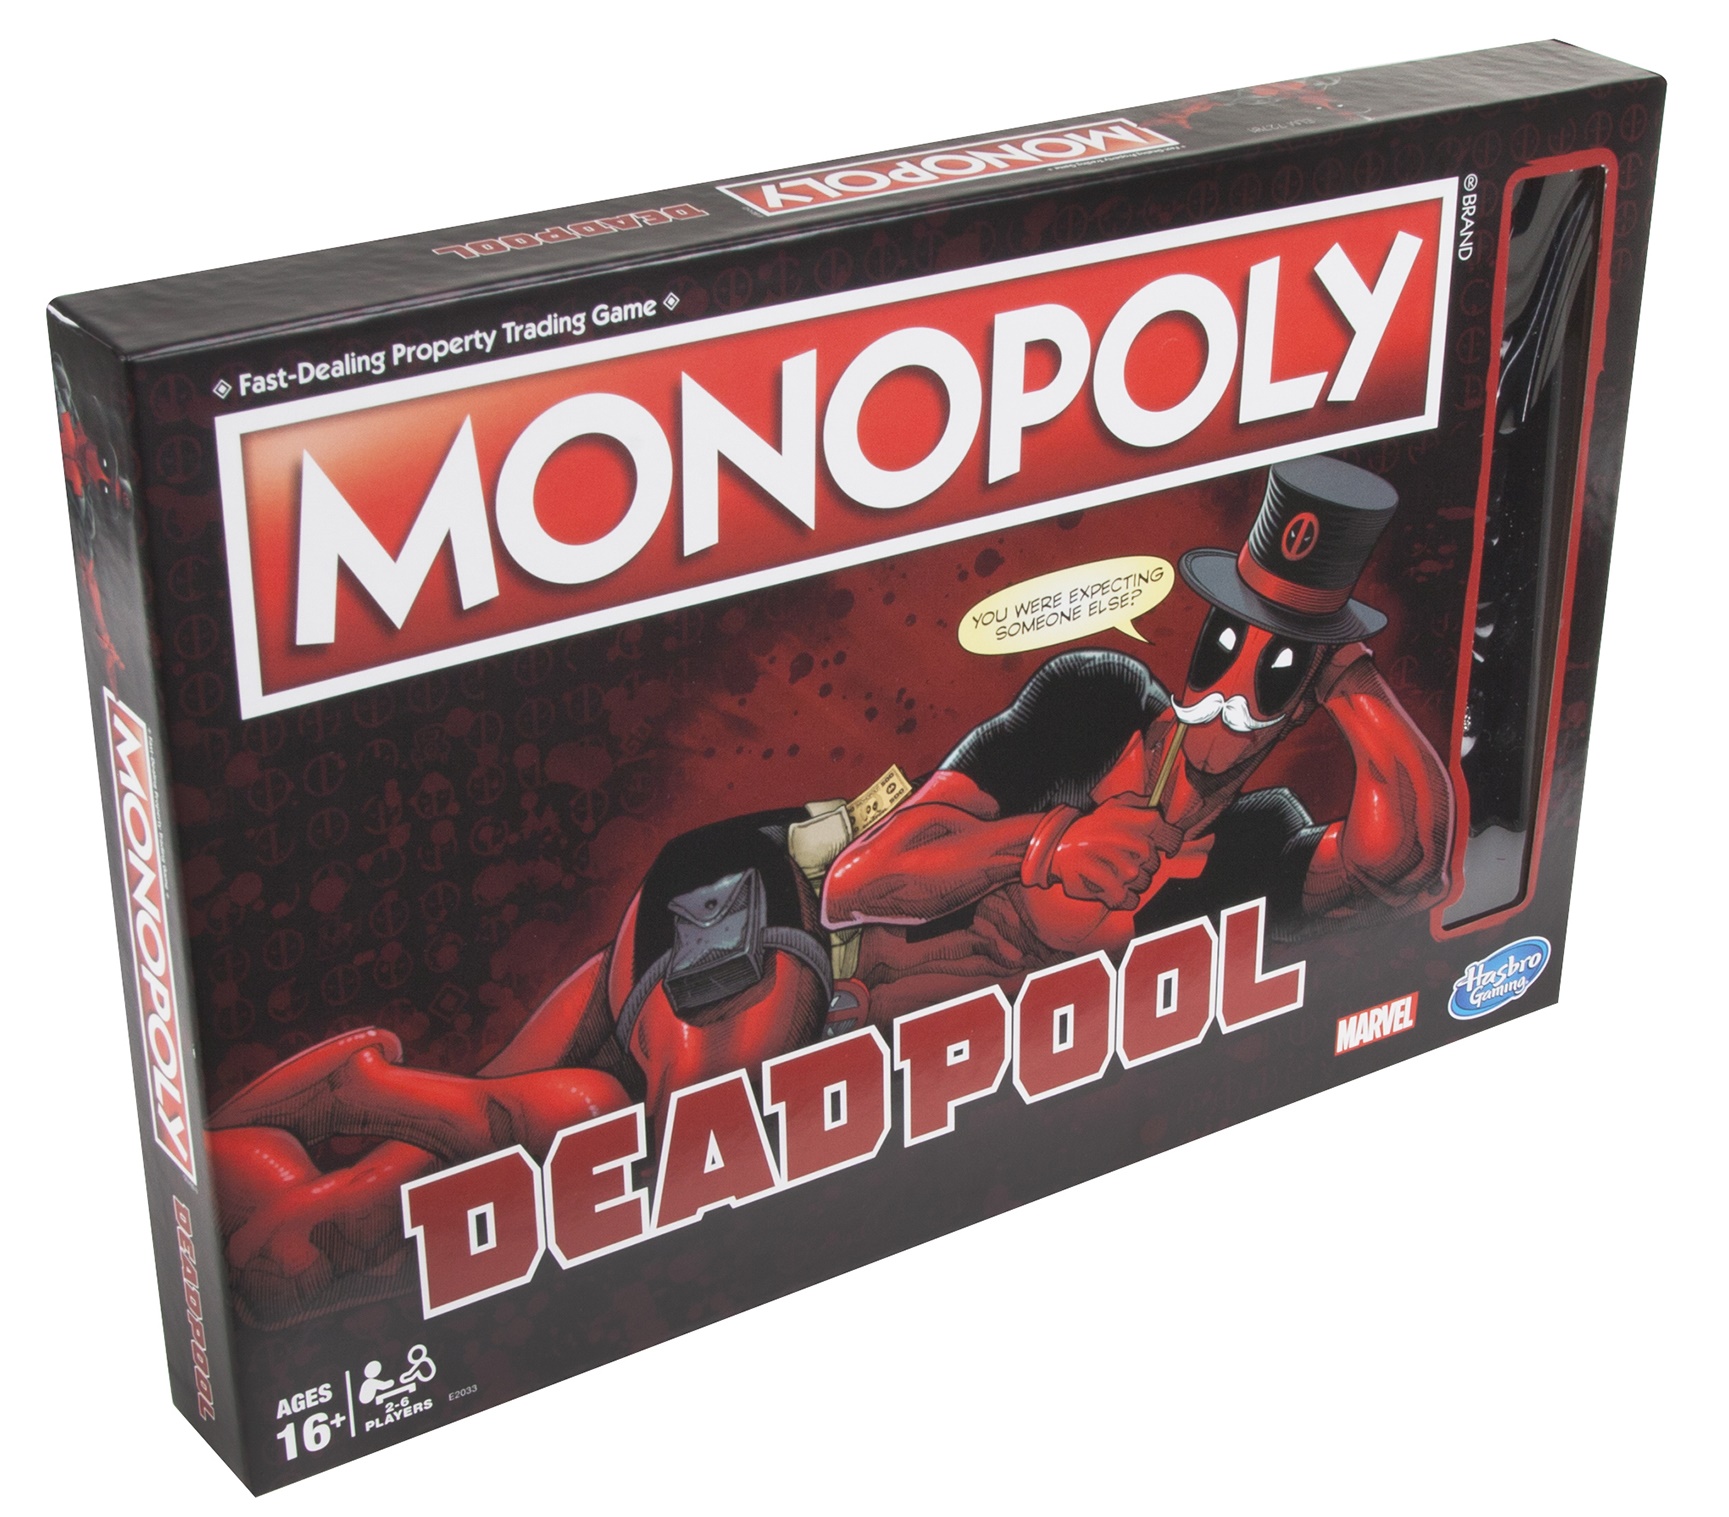 Monopoly Deadpool